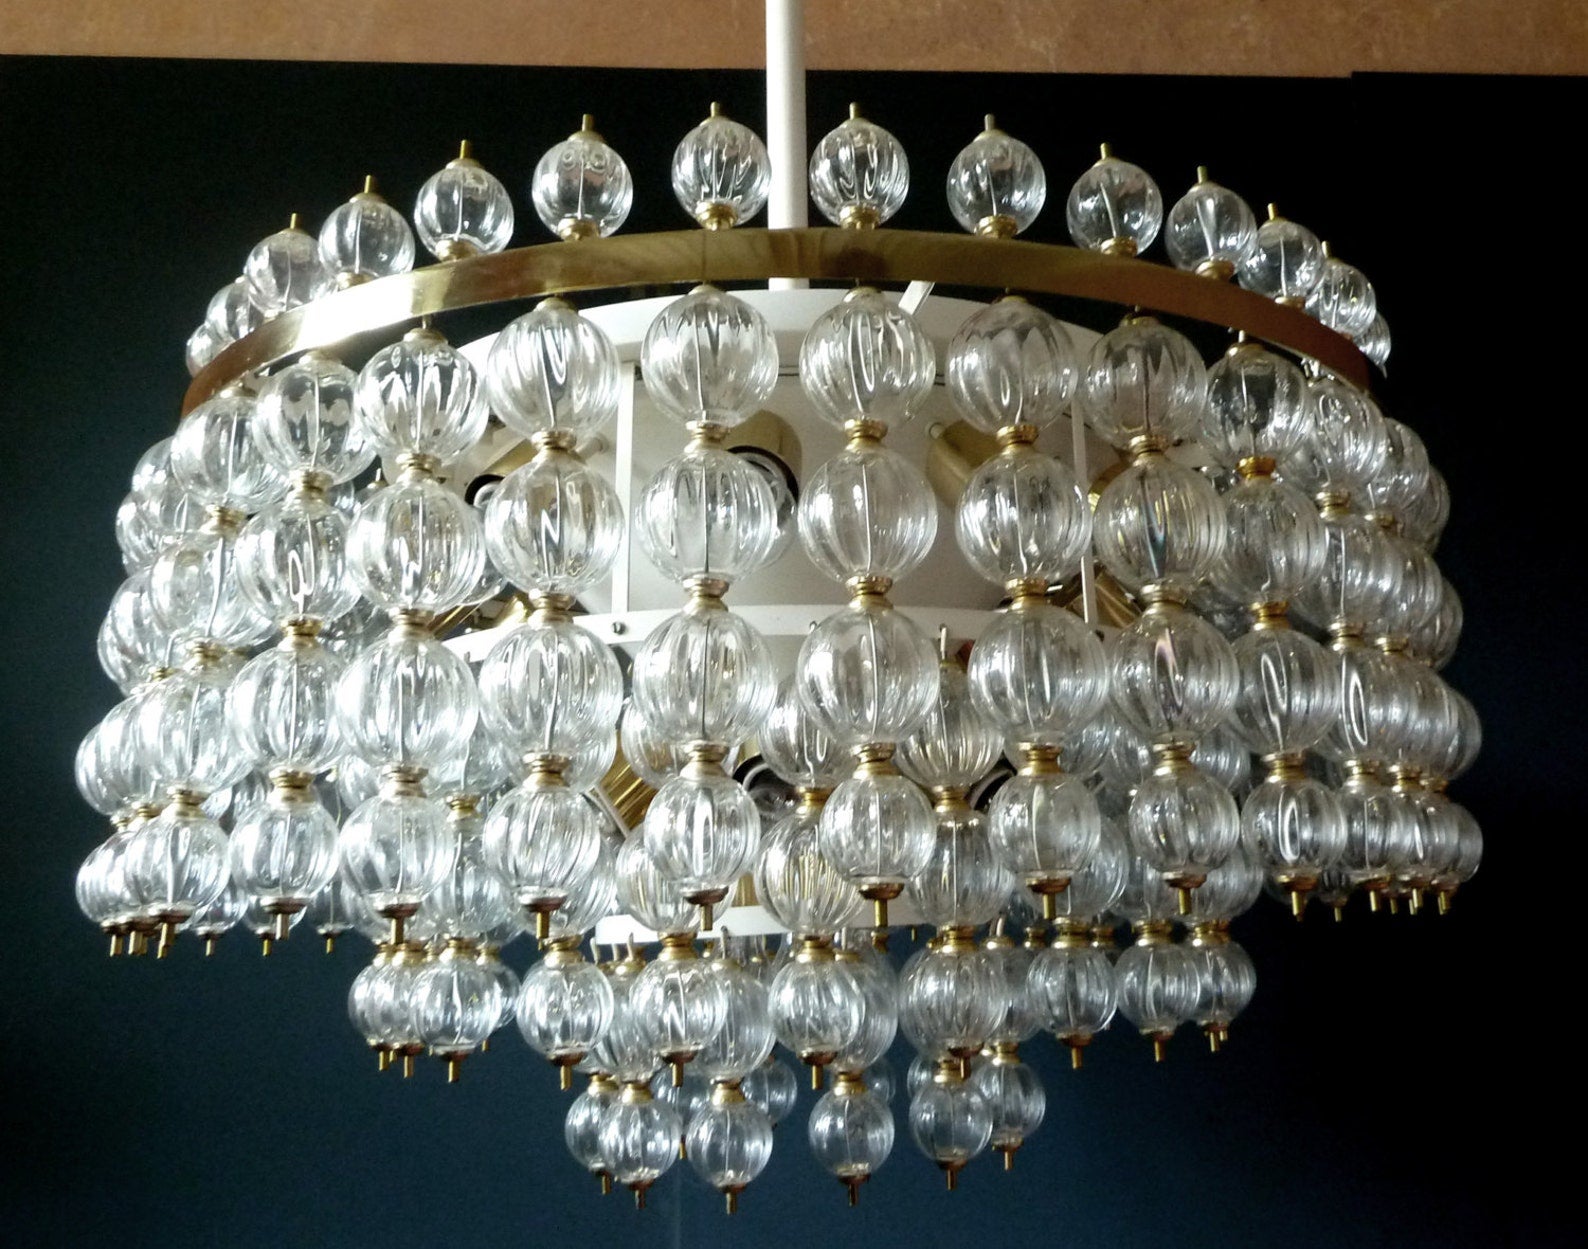 Gigantic blown glass chandelier
Diameter 3,3 feet - glass body 2 feet high - maximal height 7,2 feet

Gigantic chandelier 